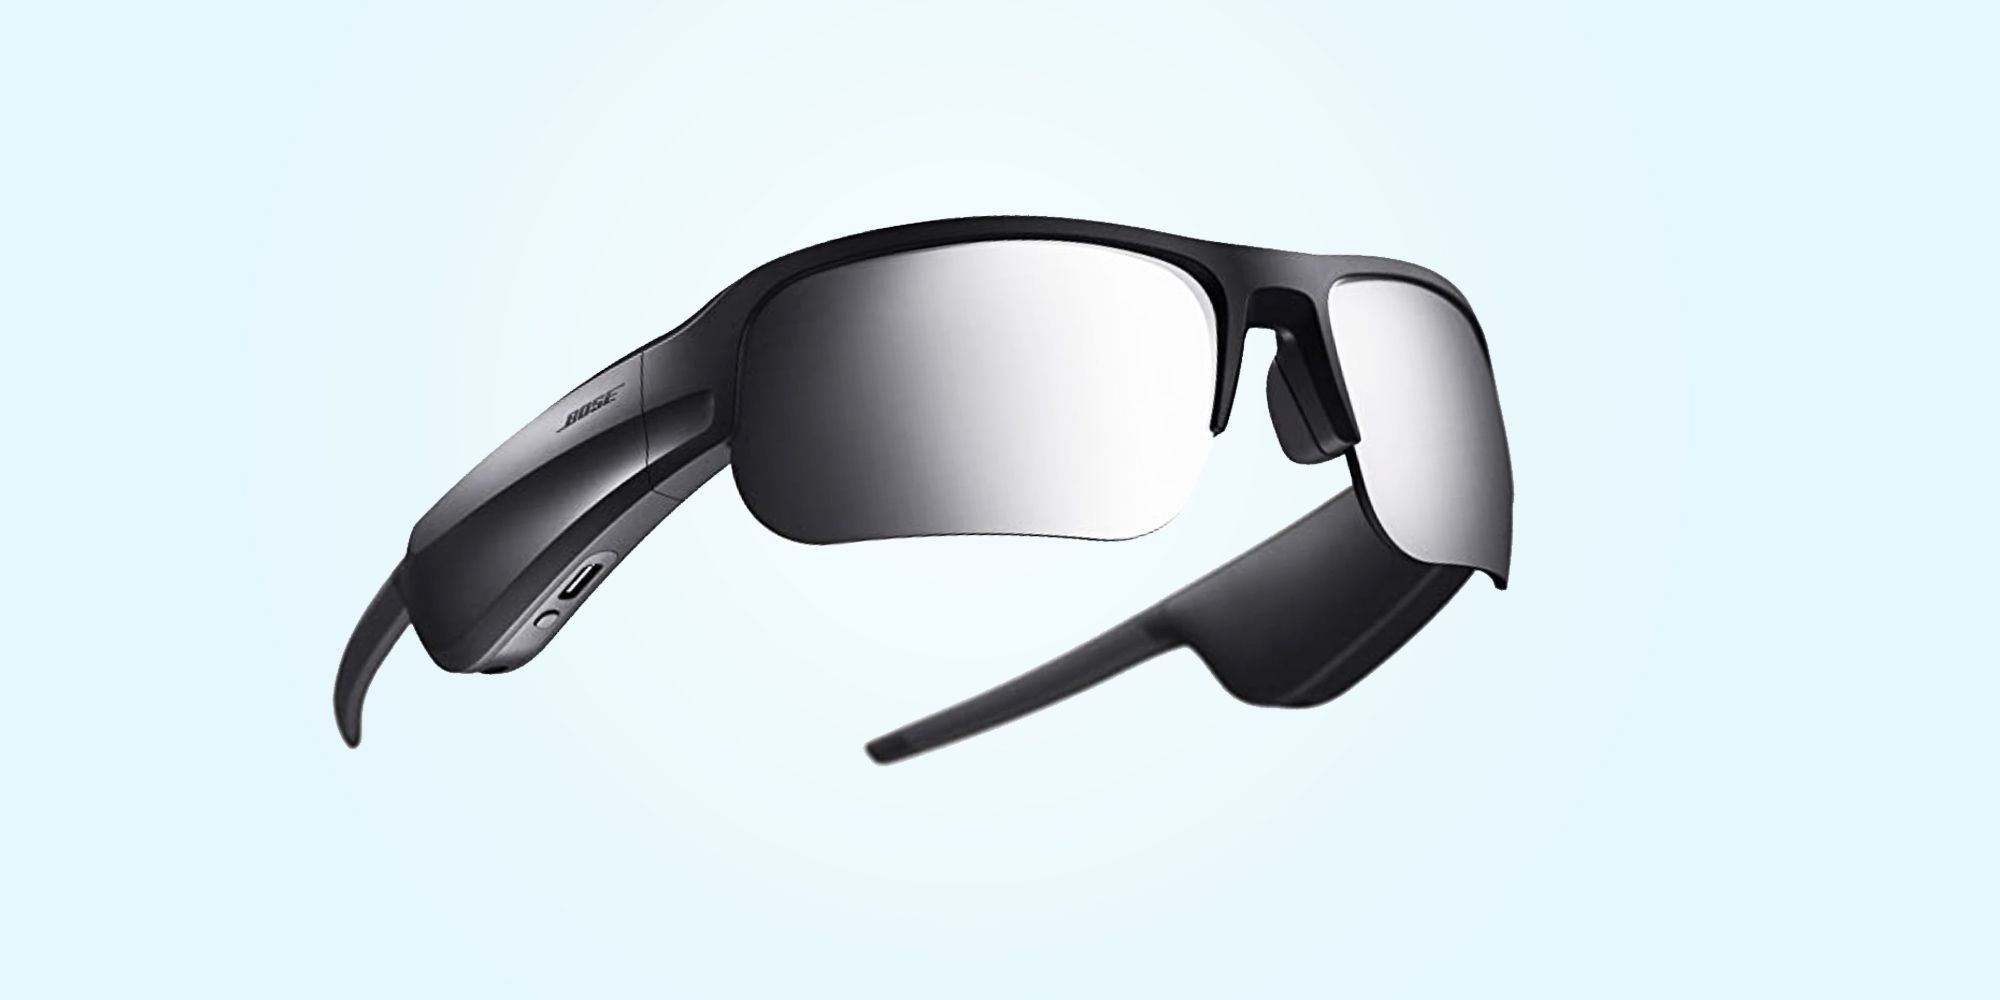 10 Best Smart Glasses 2022 - Frames with Speakers, Cameras, AR